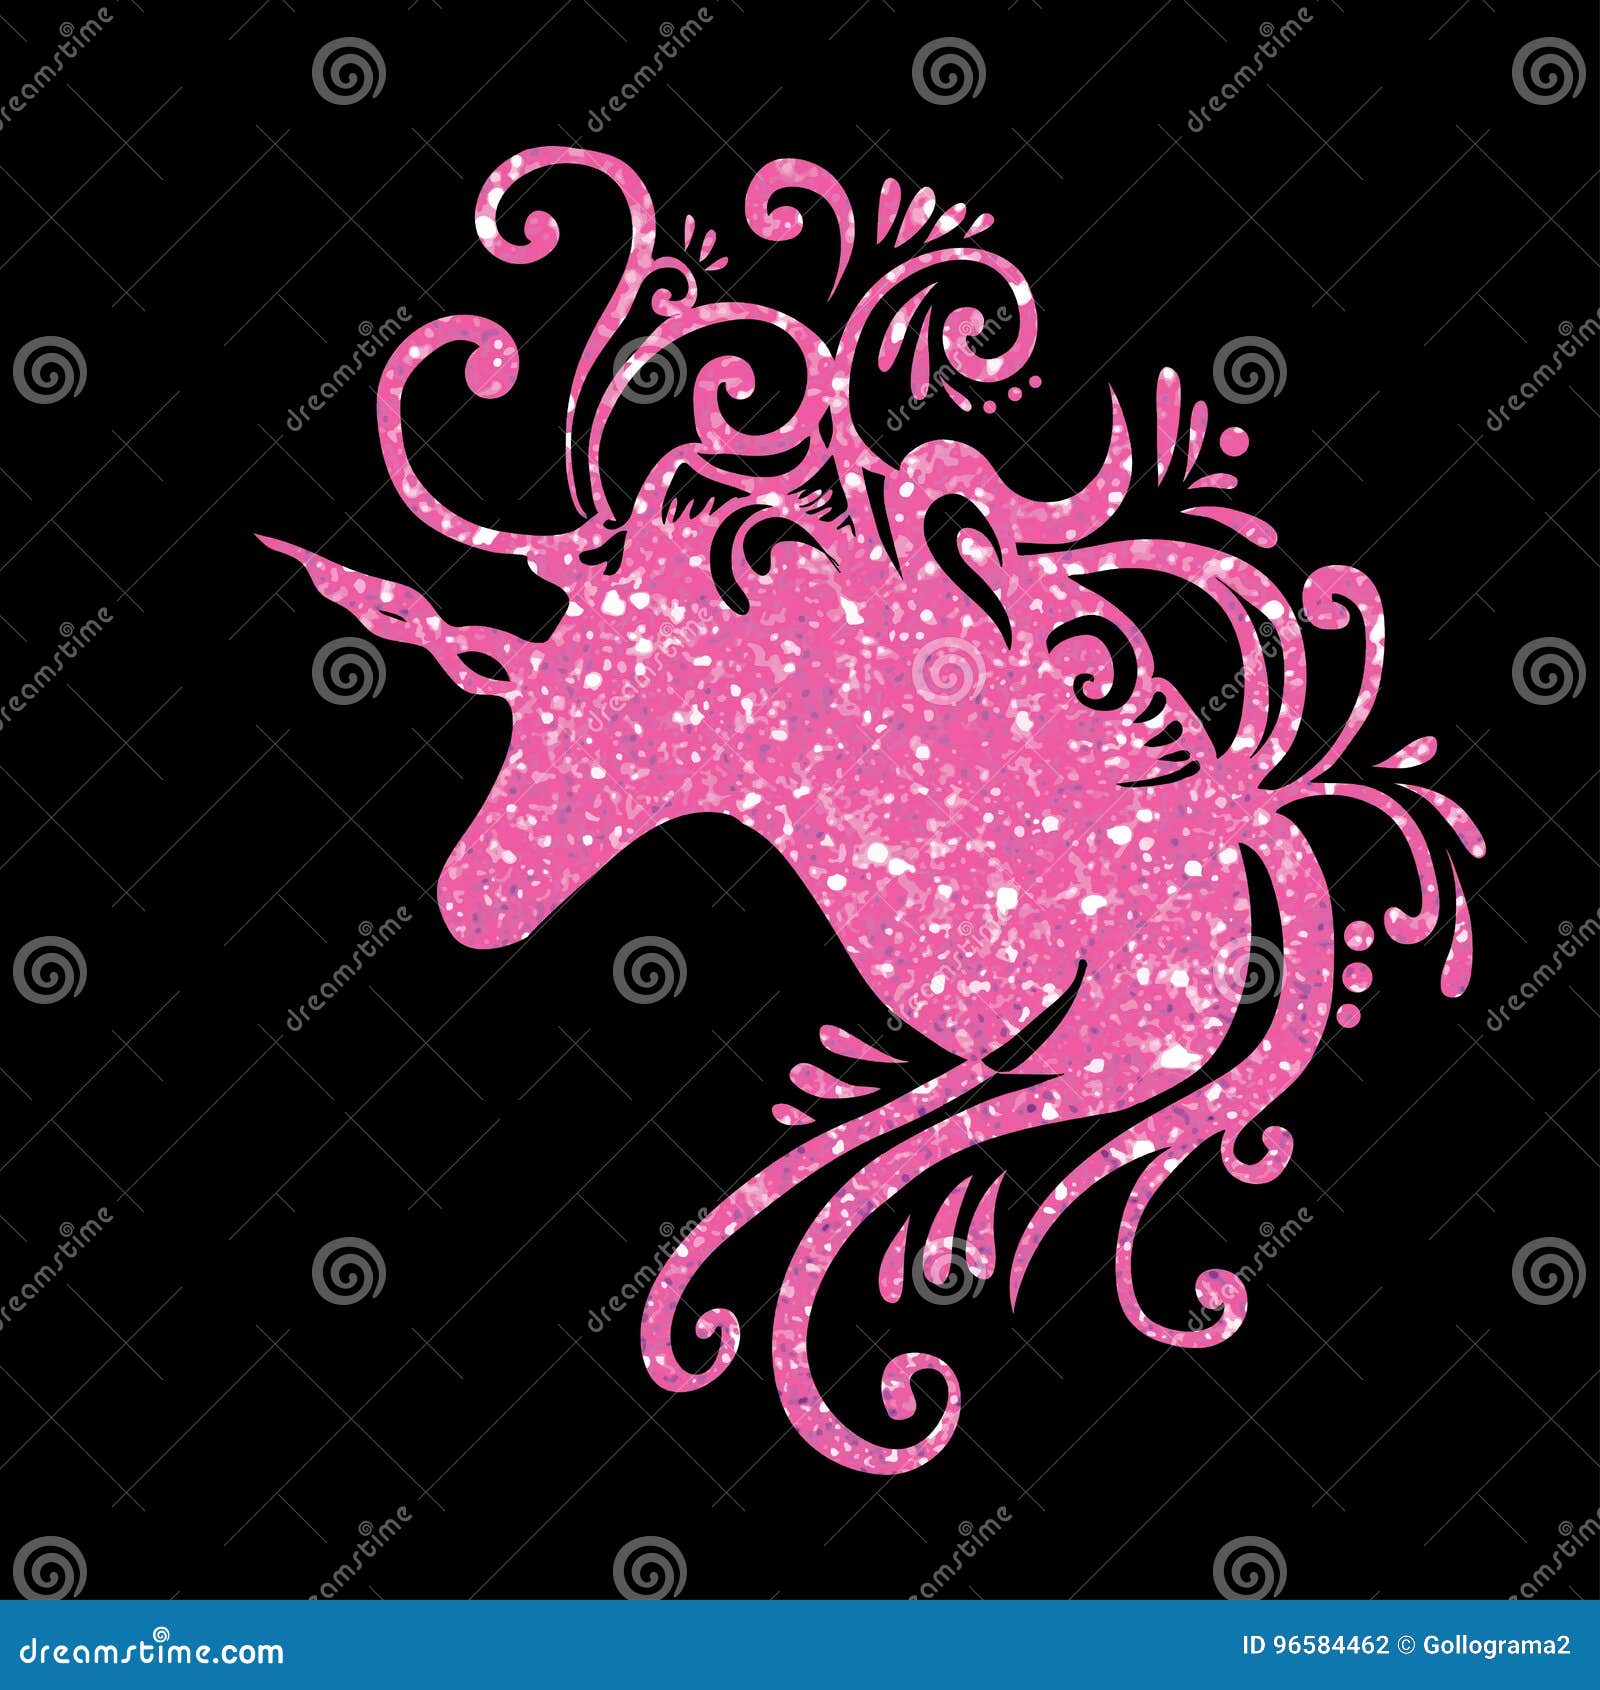 Pink Glitter Wallpaper Unicorn Vector Images (over 550)